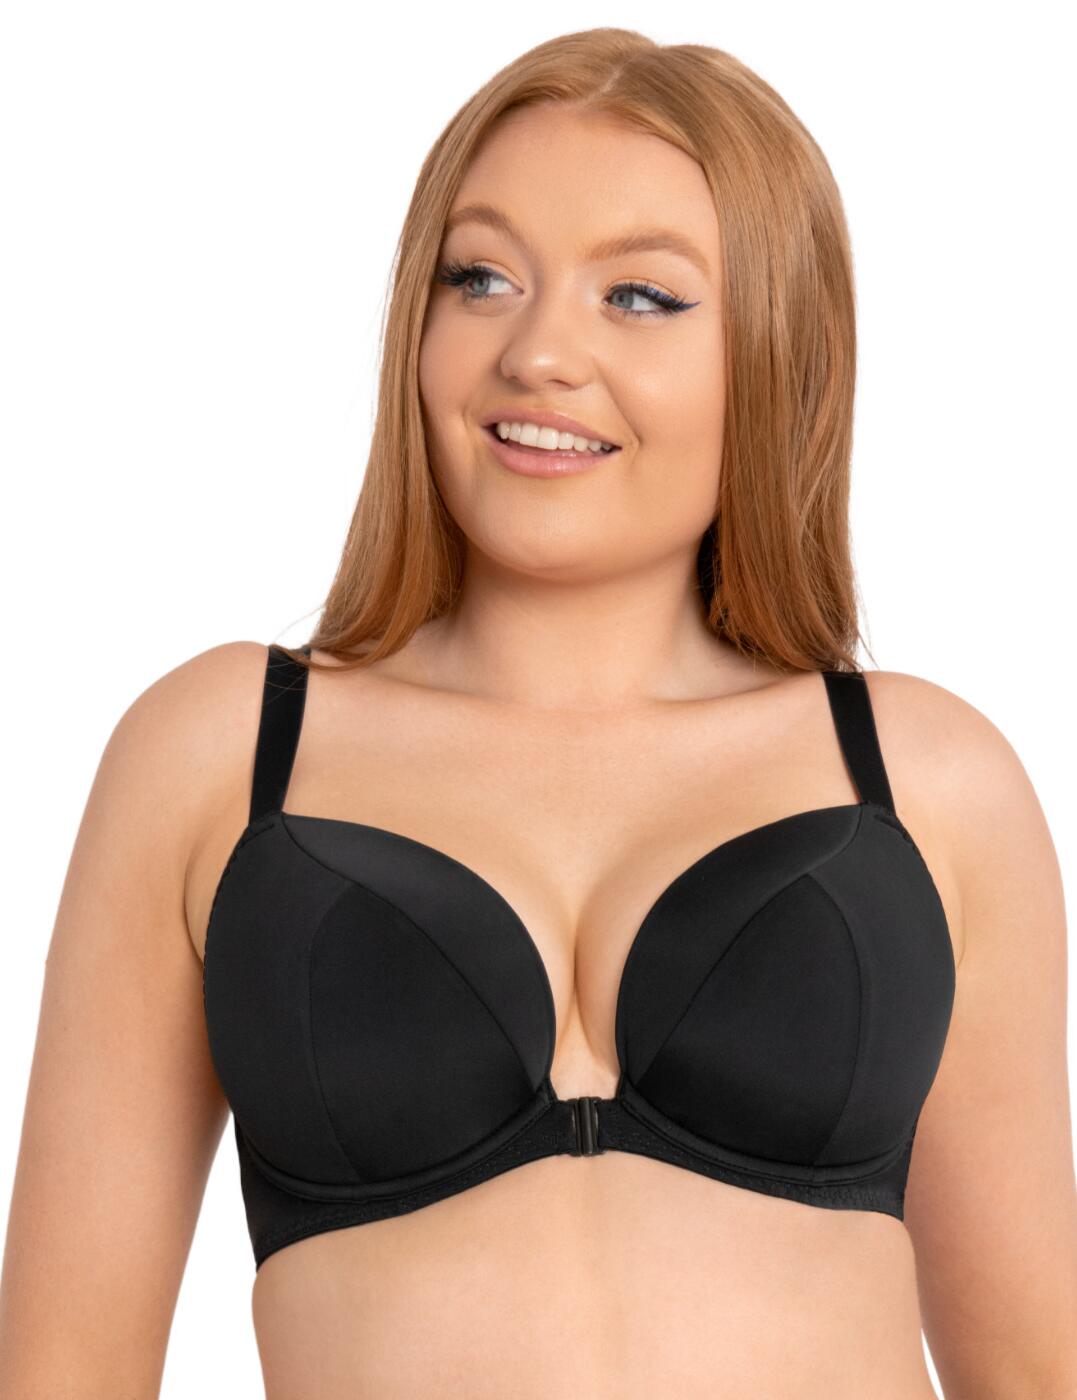 Curvy Kate multiway super plunge bra in black